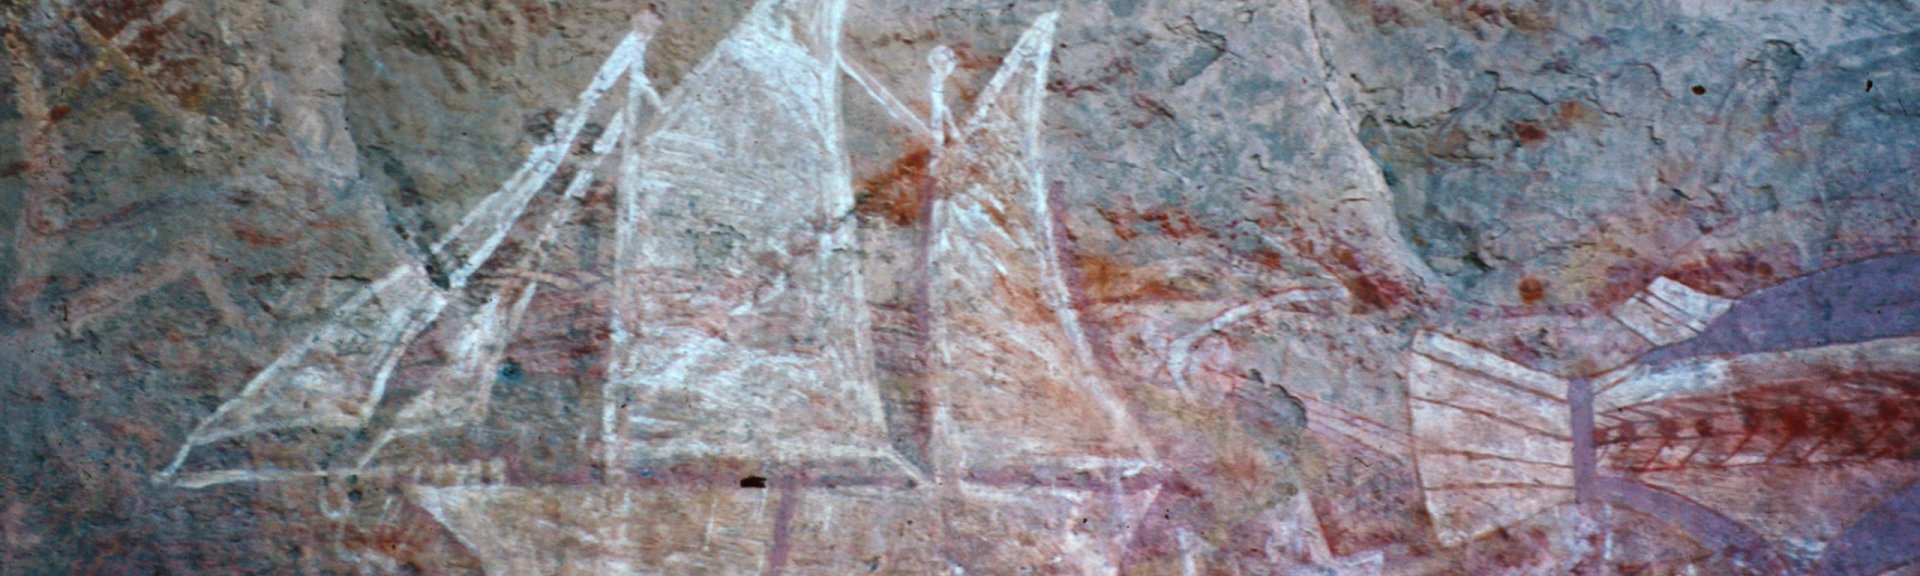 rock art at Nanguluwurr Nourlangie credit - Parks Australia